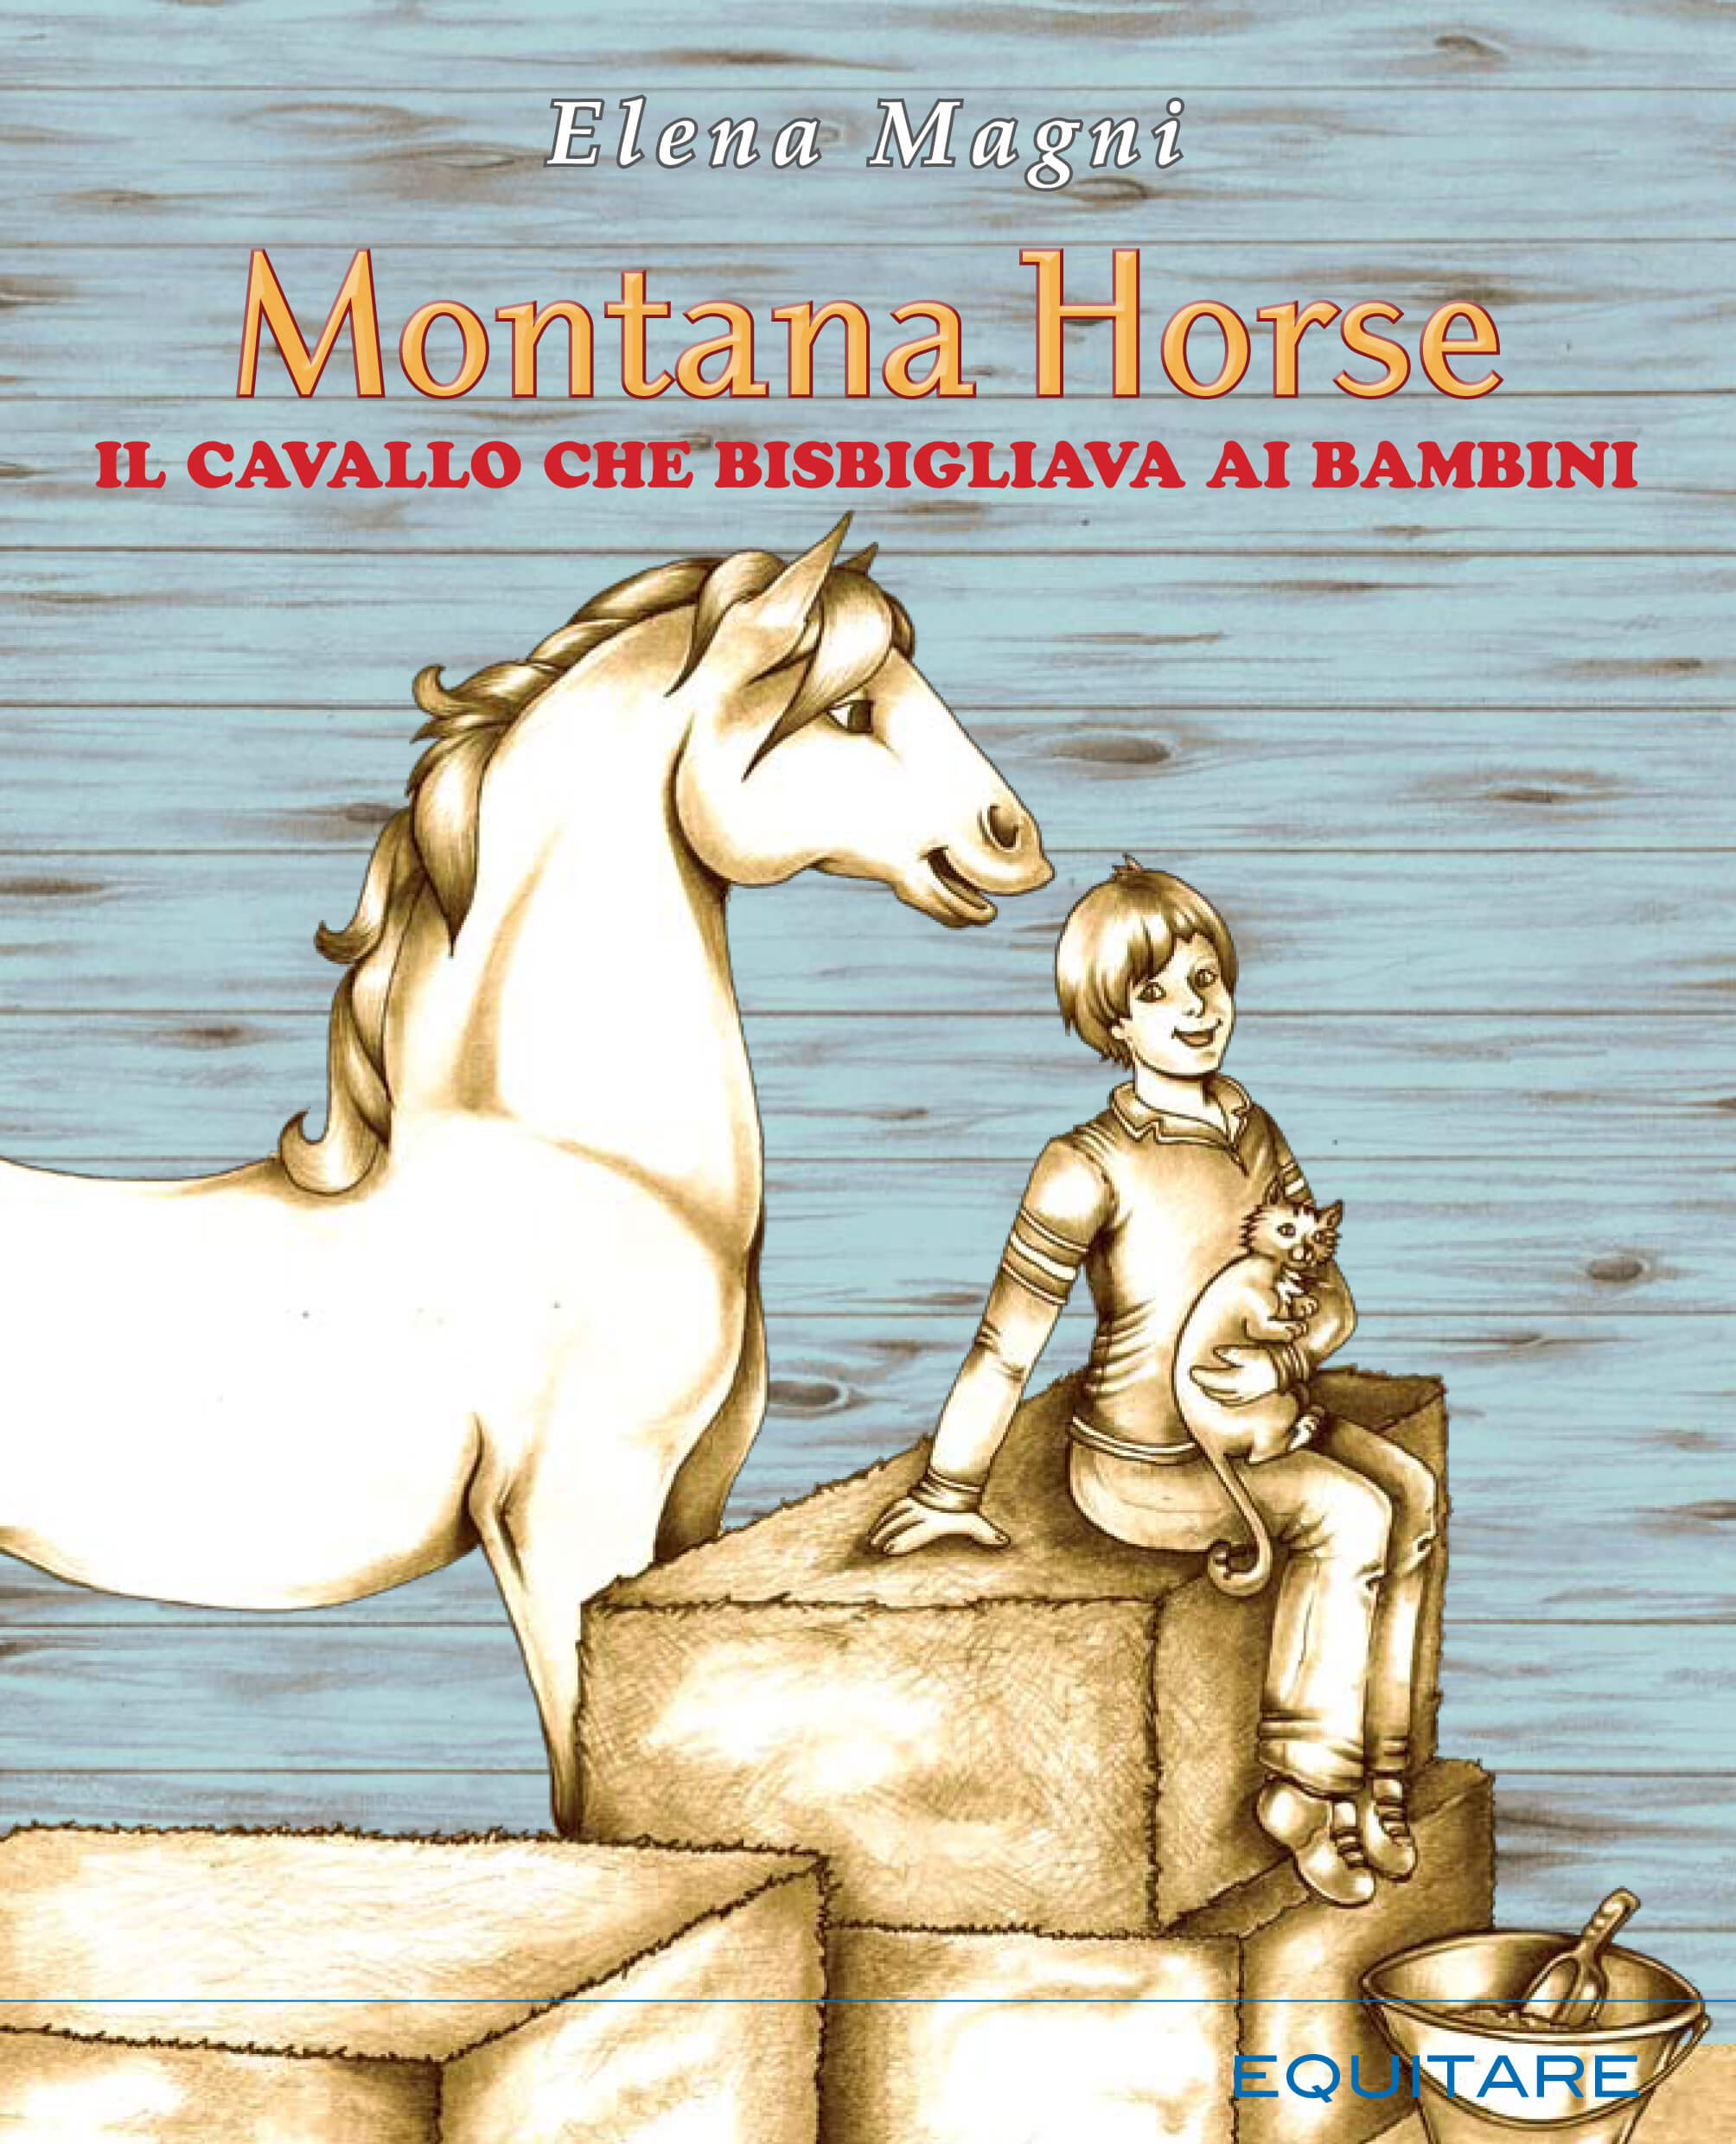 MONTANA HORSE - Elena Magni